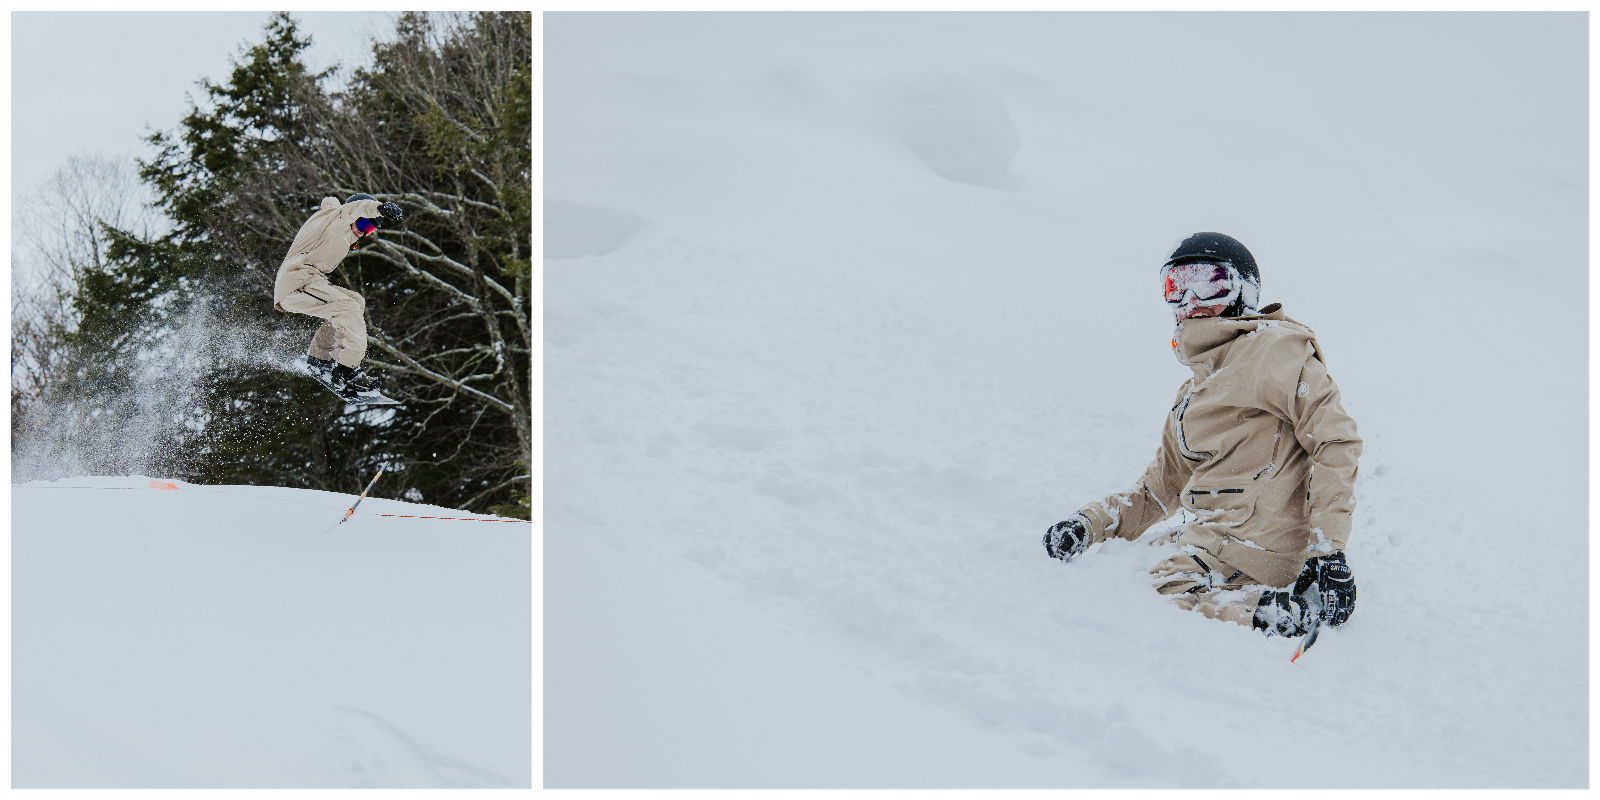 winter, snow, snowboard, snowboarding, Sunapee Mountain, New Hampshire, K2 Snowboards, Ride, Lib Tech, K2, snowboard test